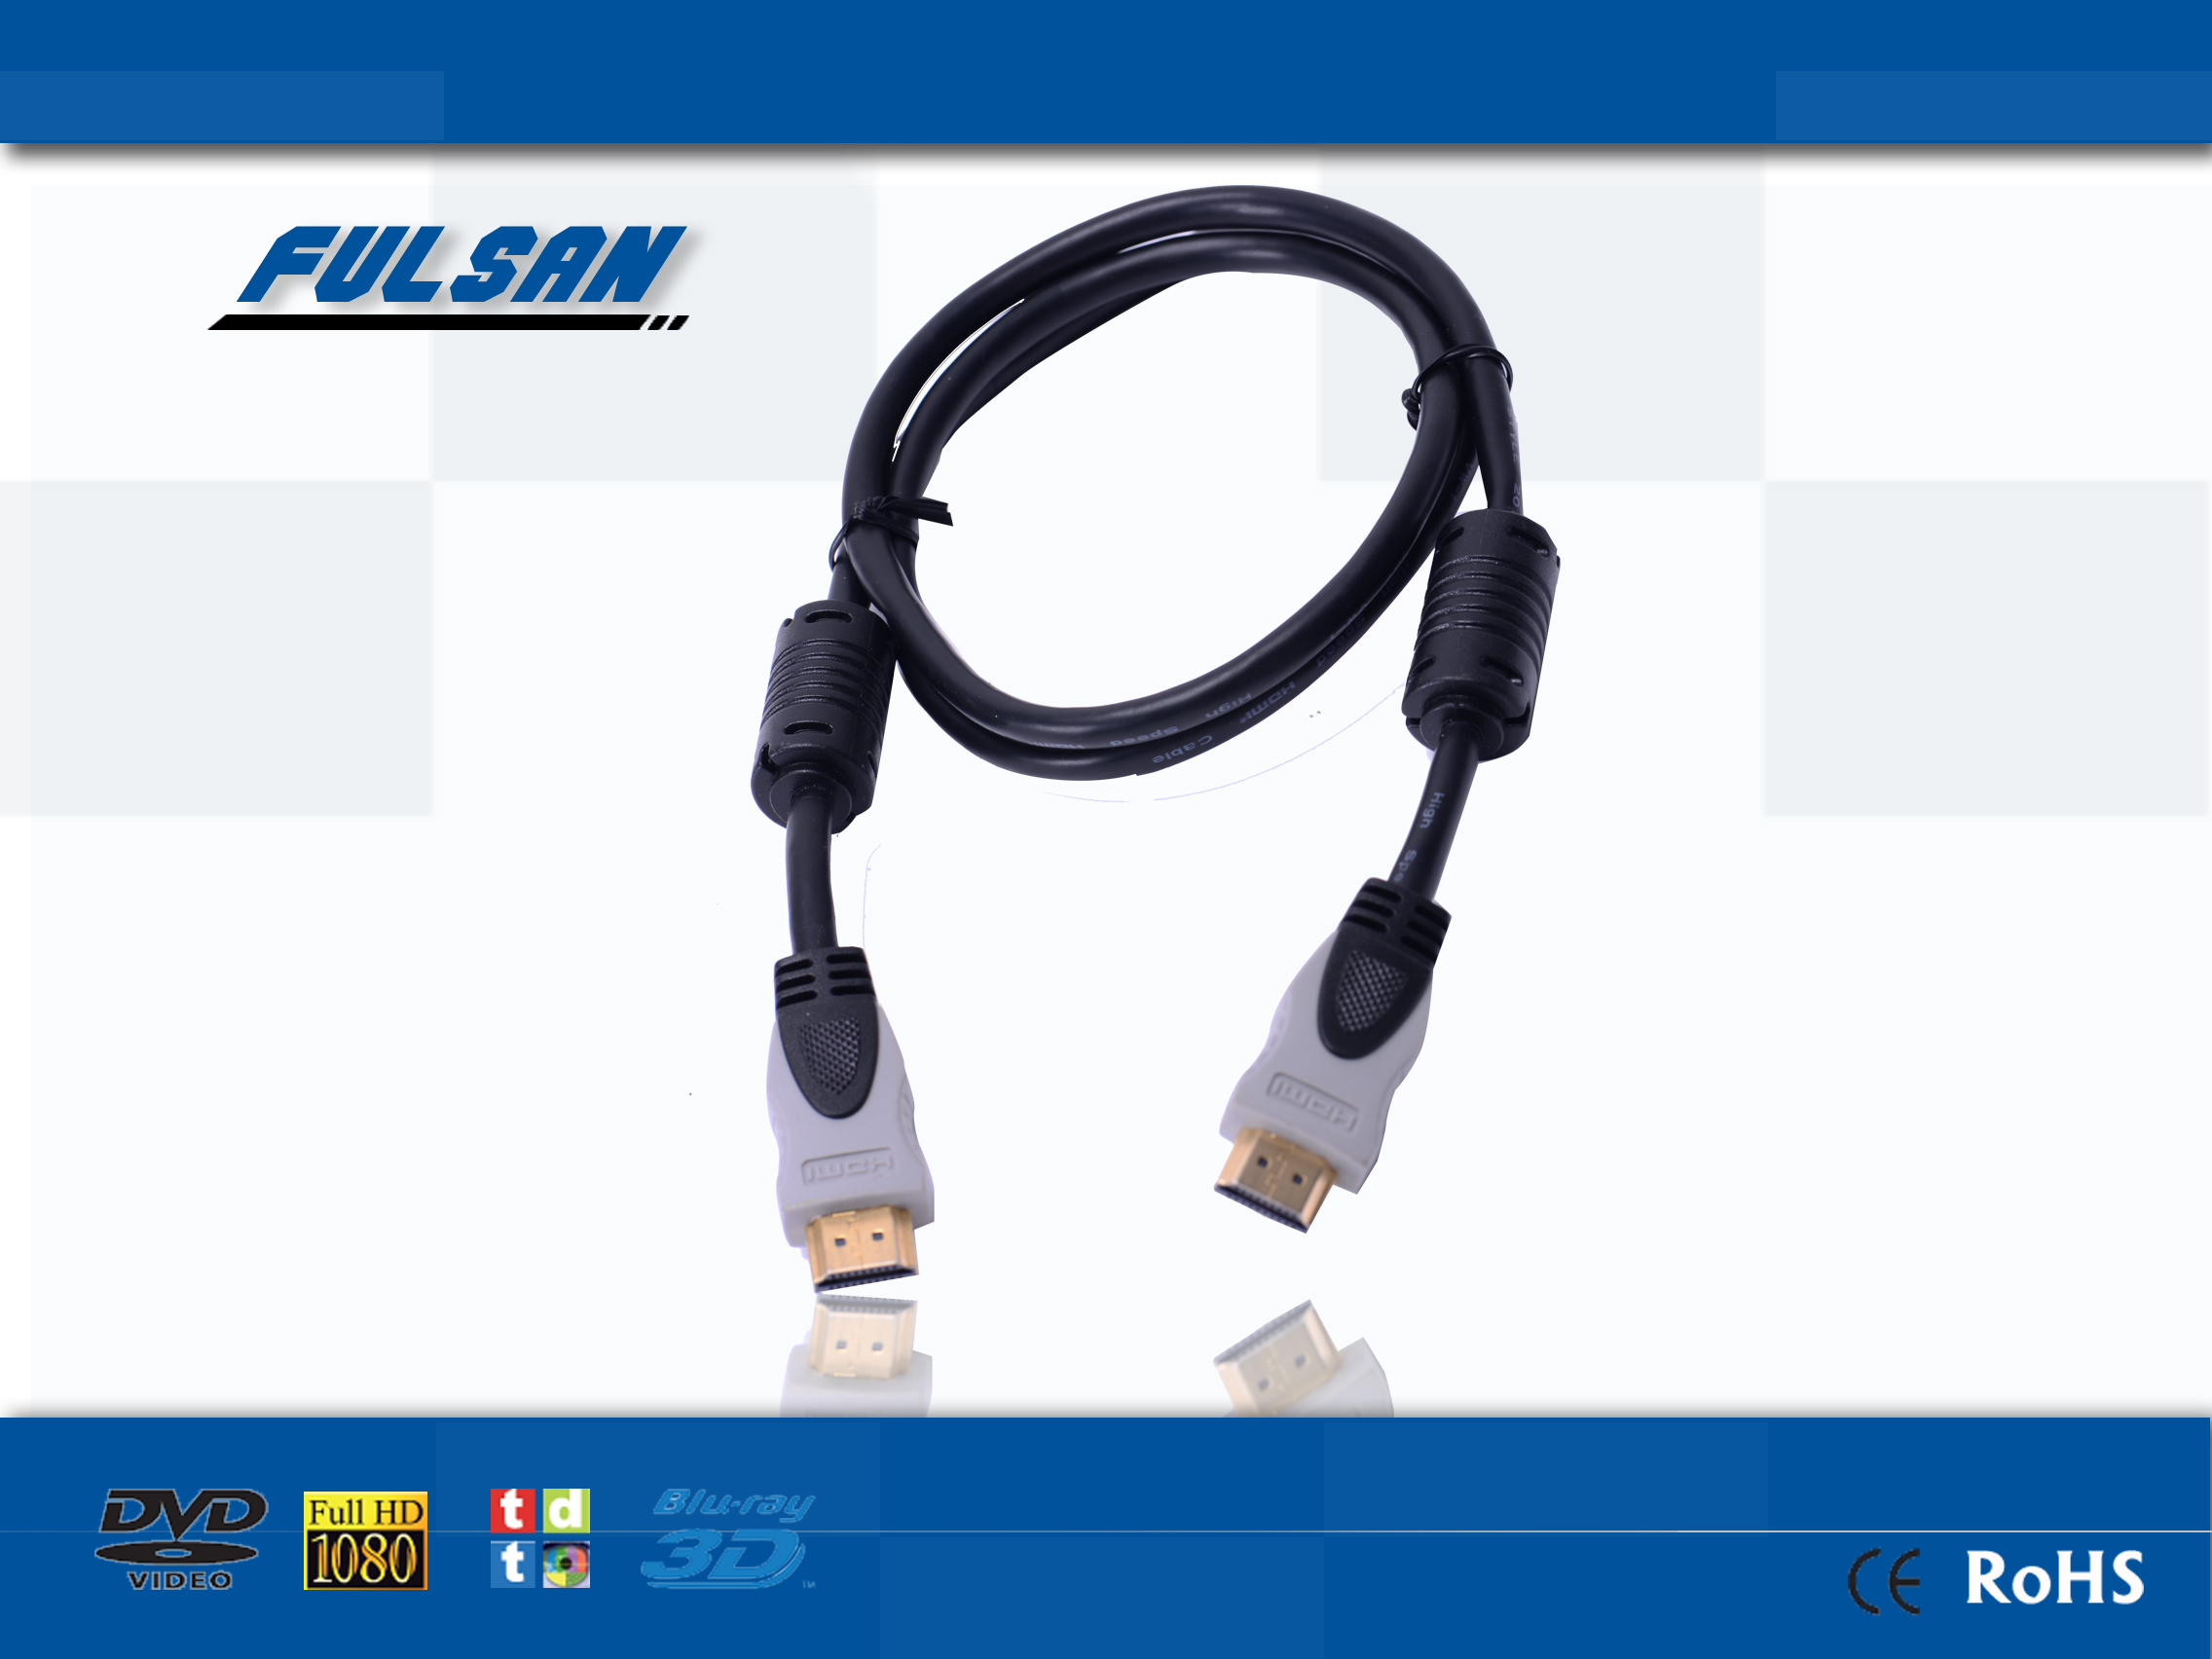 Fiber Optic HDMI Cable Support 4k@60Hz 3D 4:4:4 Full 18Gbps HDR ARC Ps4 Xbox 1m,2m,3m,5m,10m,15m,20m,30m,40m,50m,100m 